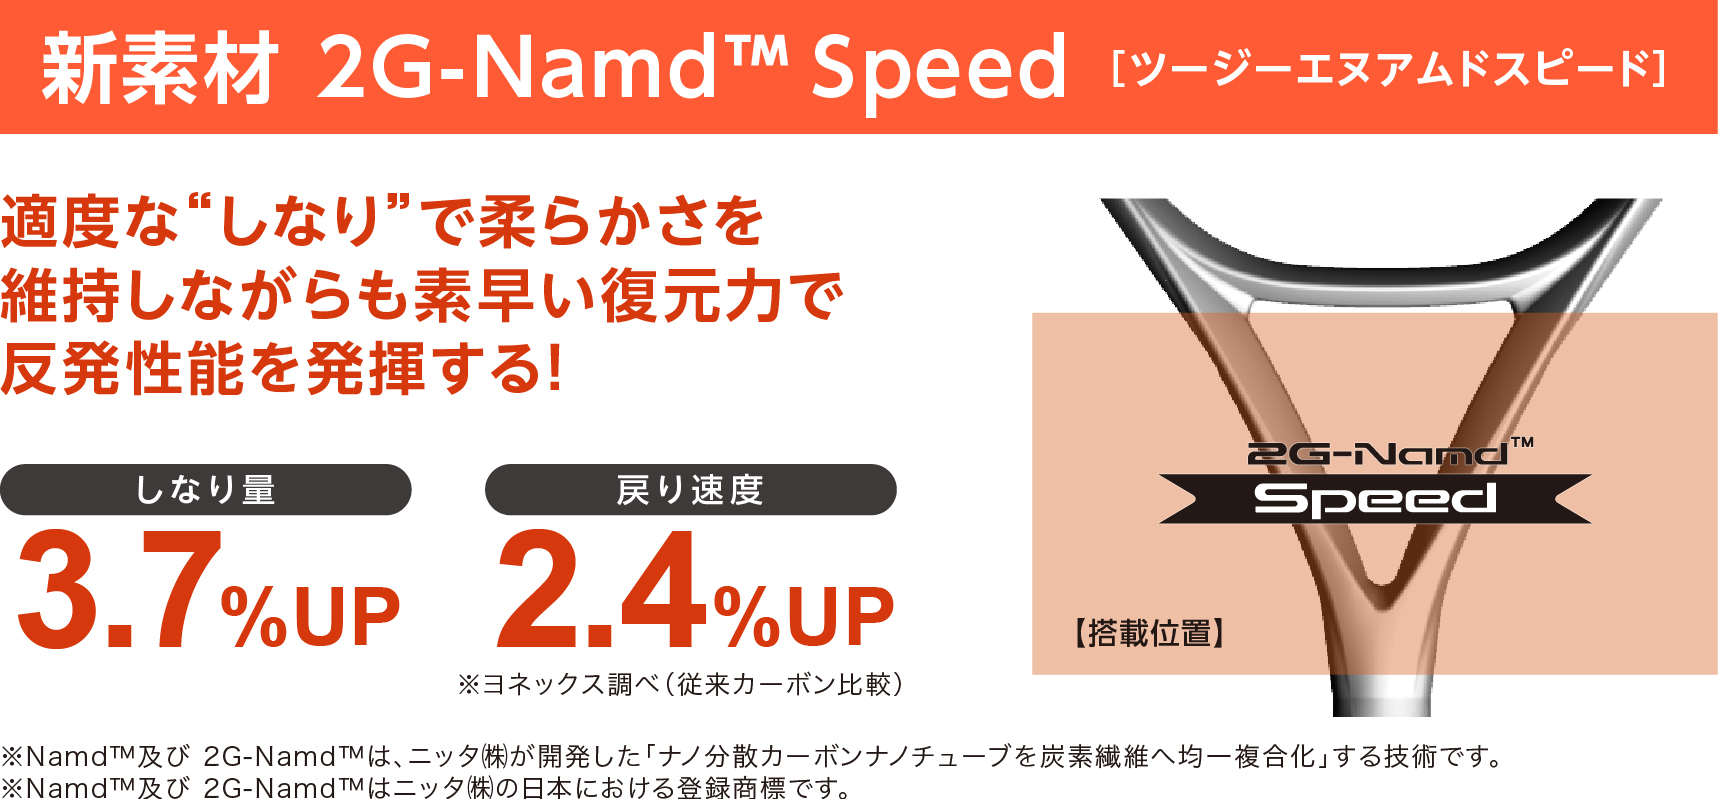 2G-Namd Speed